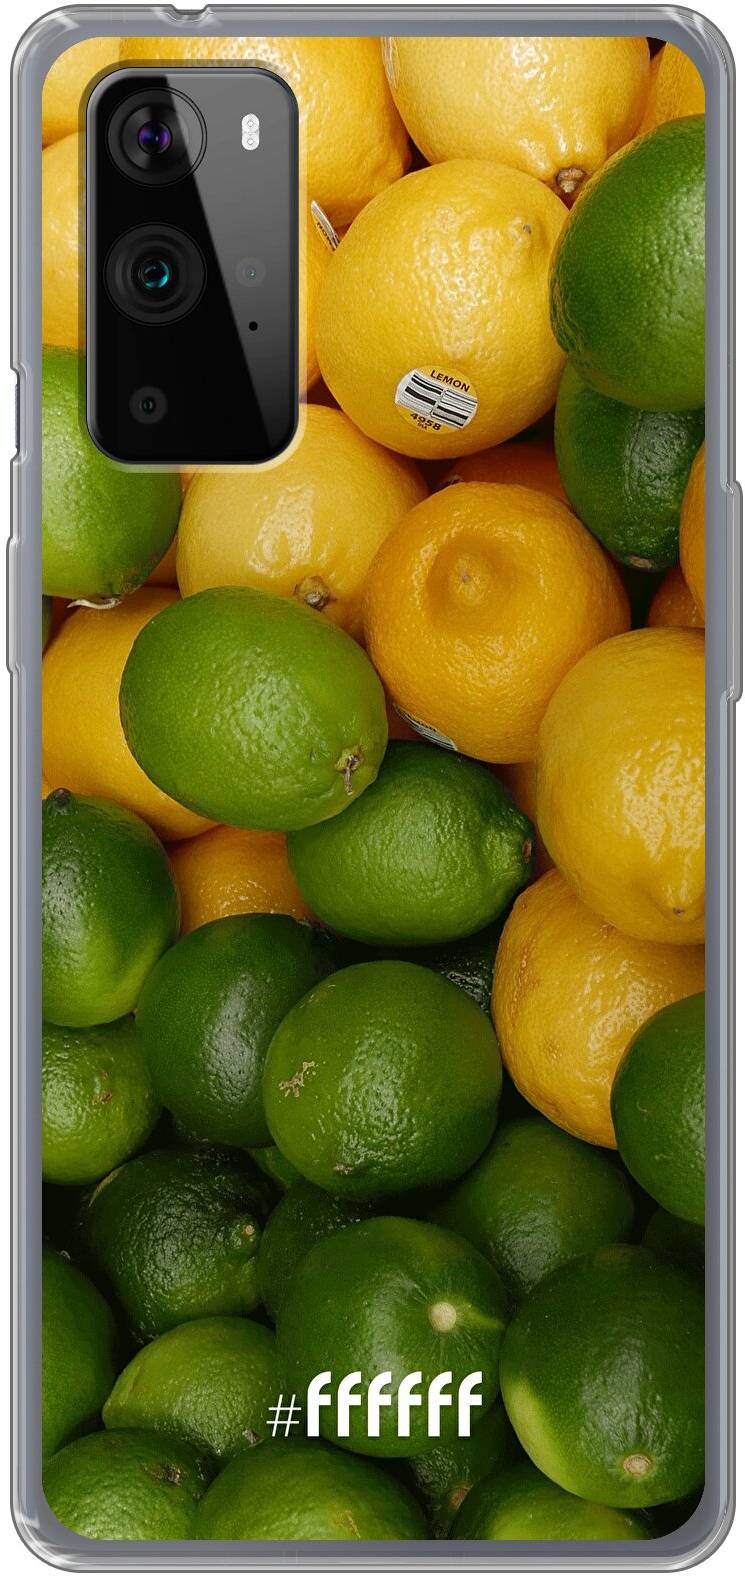 Lemon & Lime 9 Pro